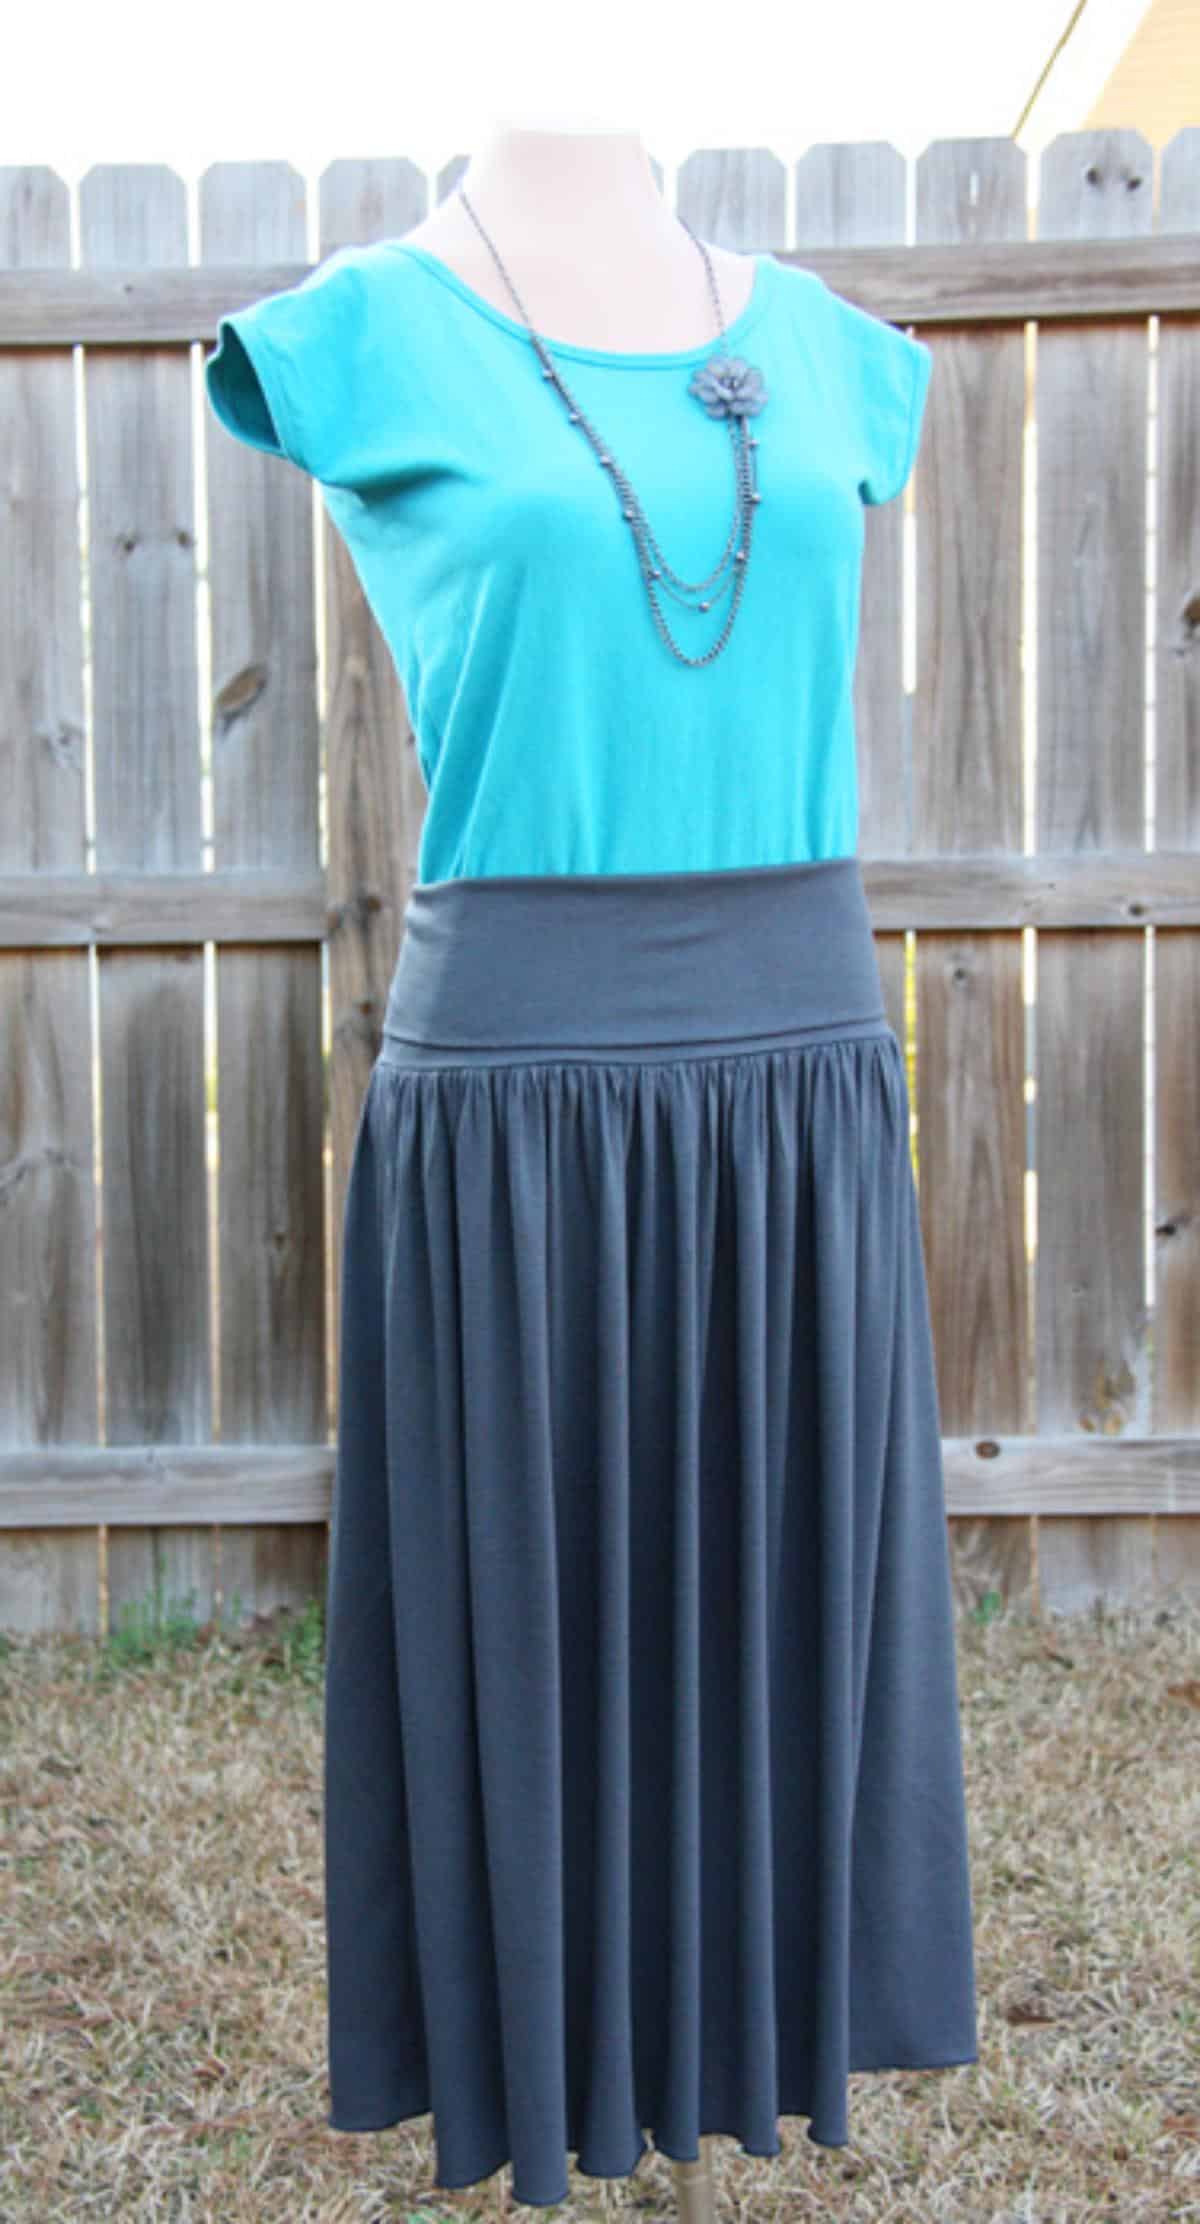 Skirt with Yoga Style Waist Band